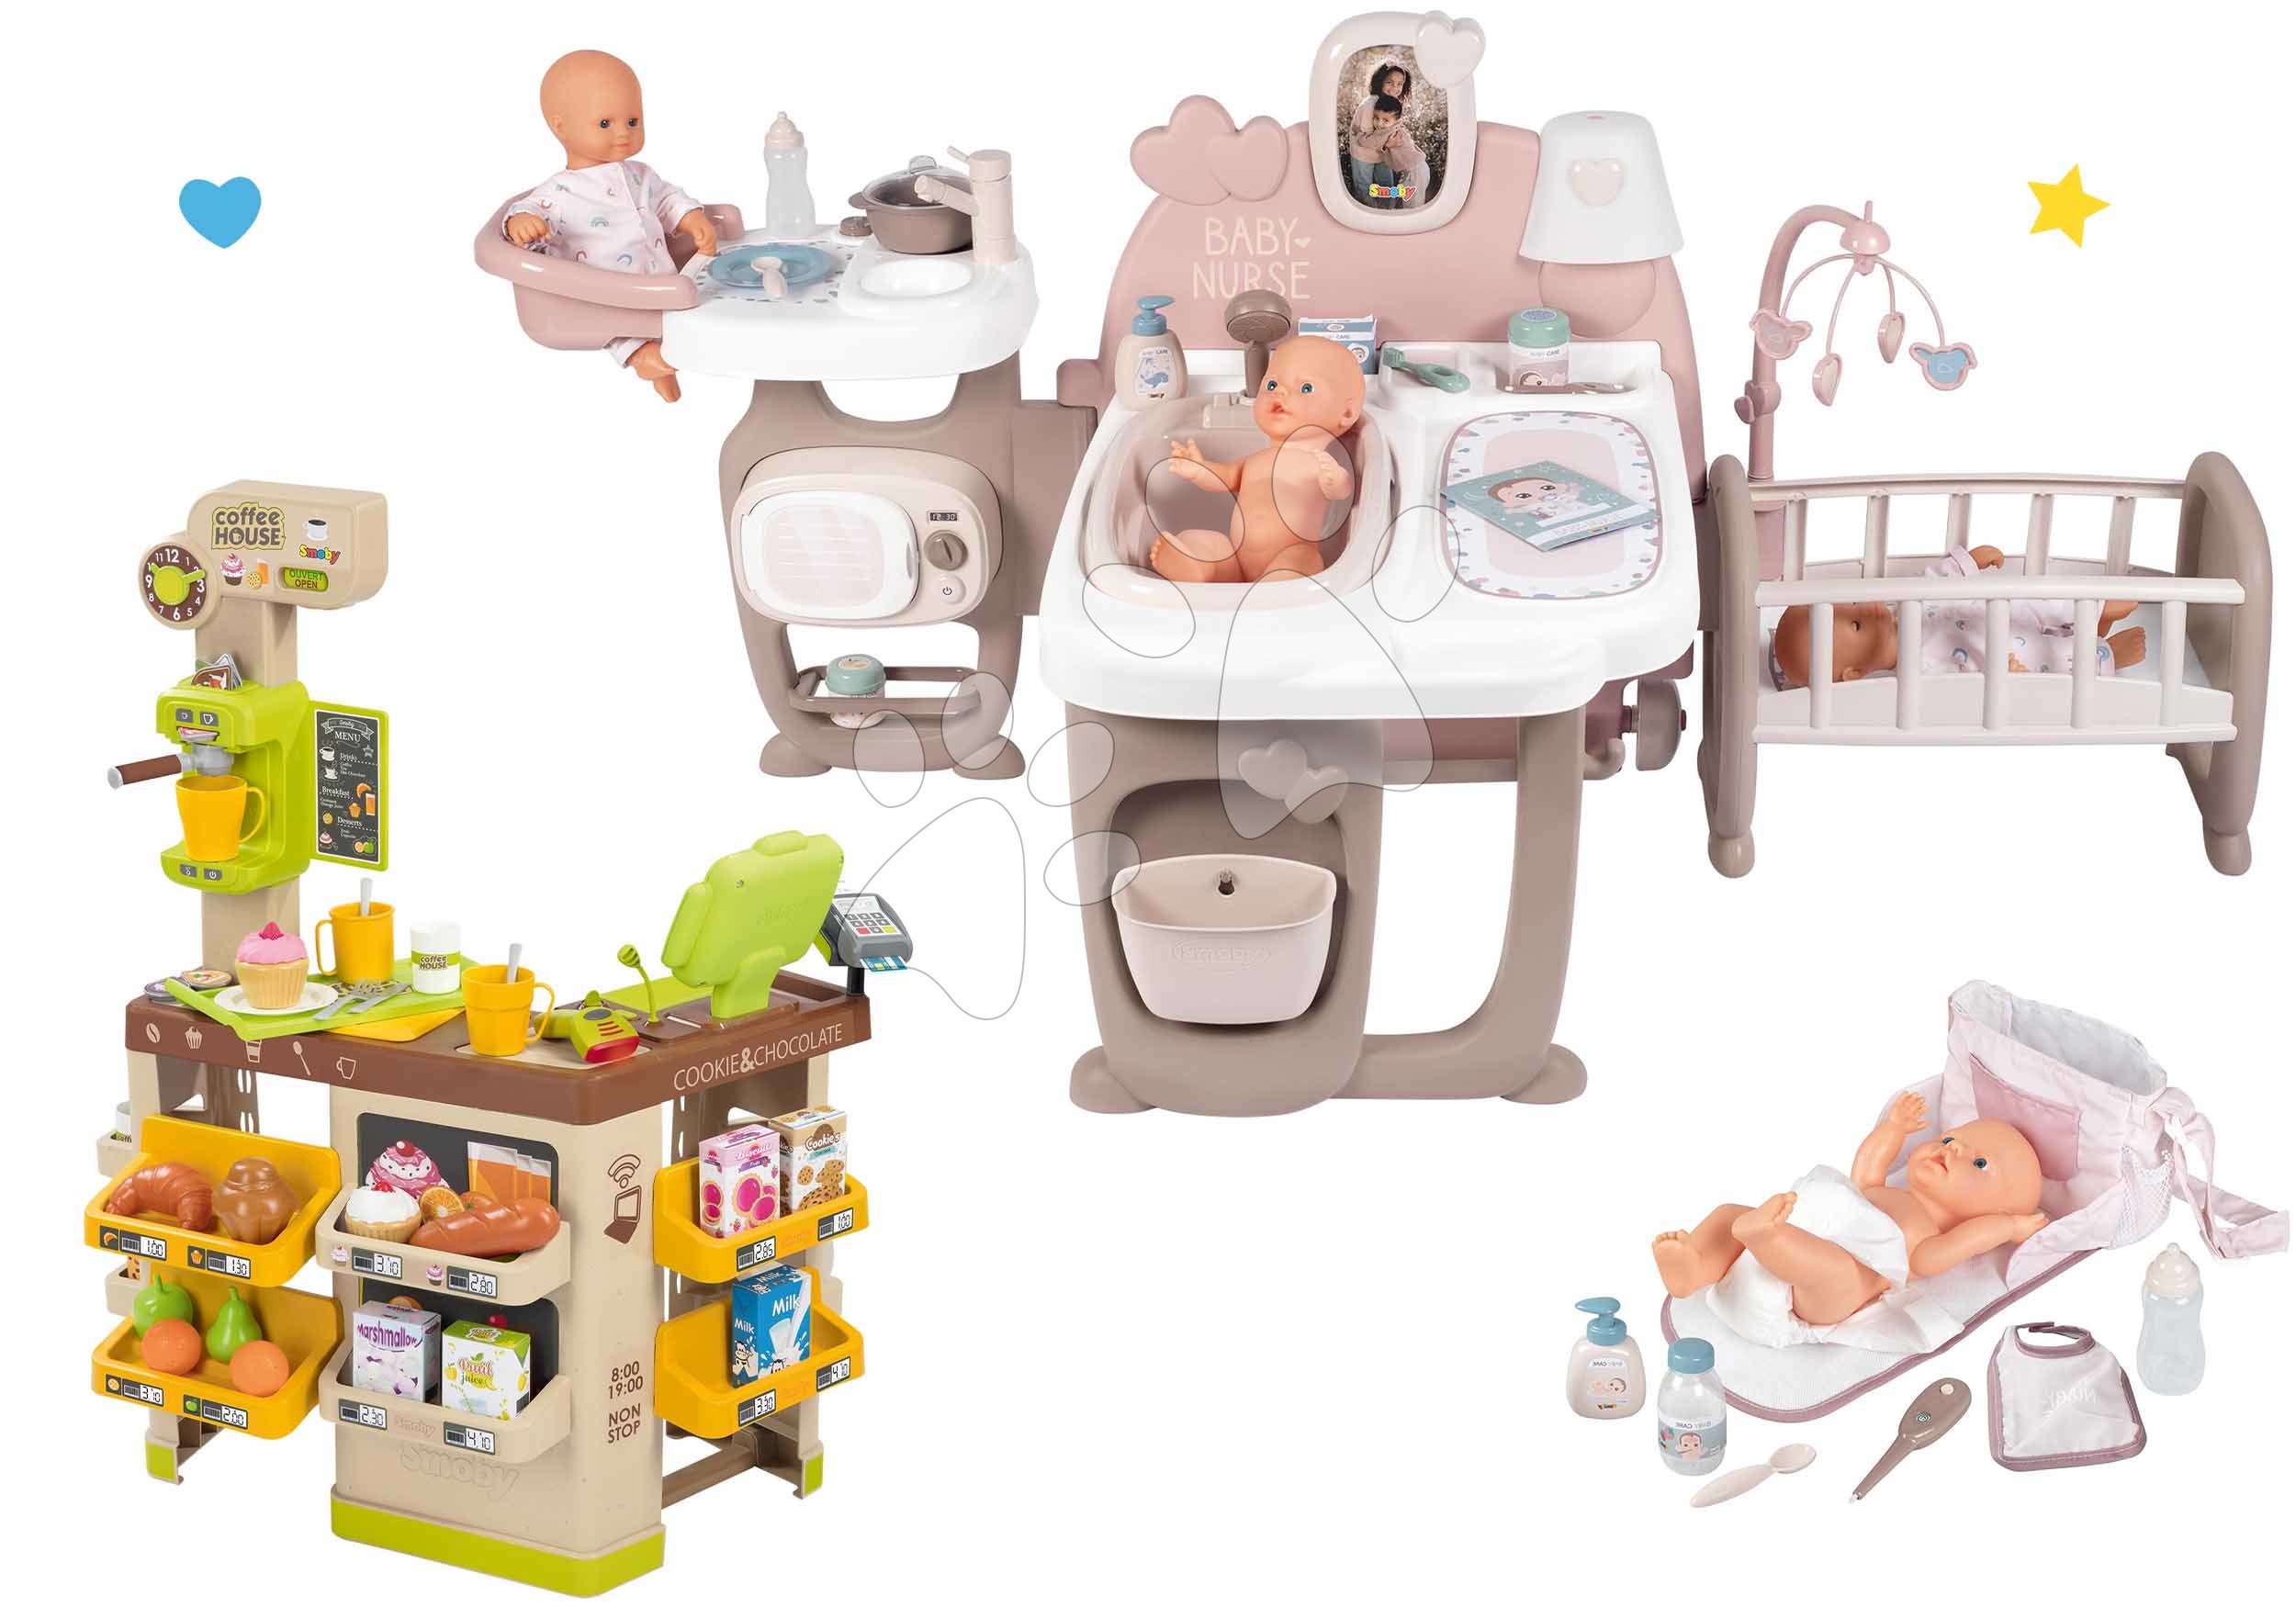 Kućice za lutke setovi - Set kućica za lutku Large Doll's Play Center Natur D'Amour Baby Nurse Smoby i kavana Bio s aparatom za kavu i torbom za previjanje s pelenom